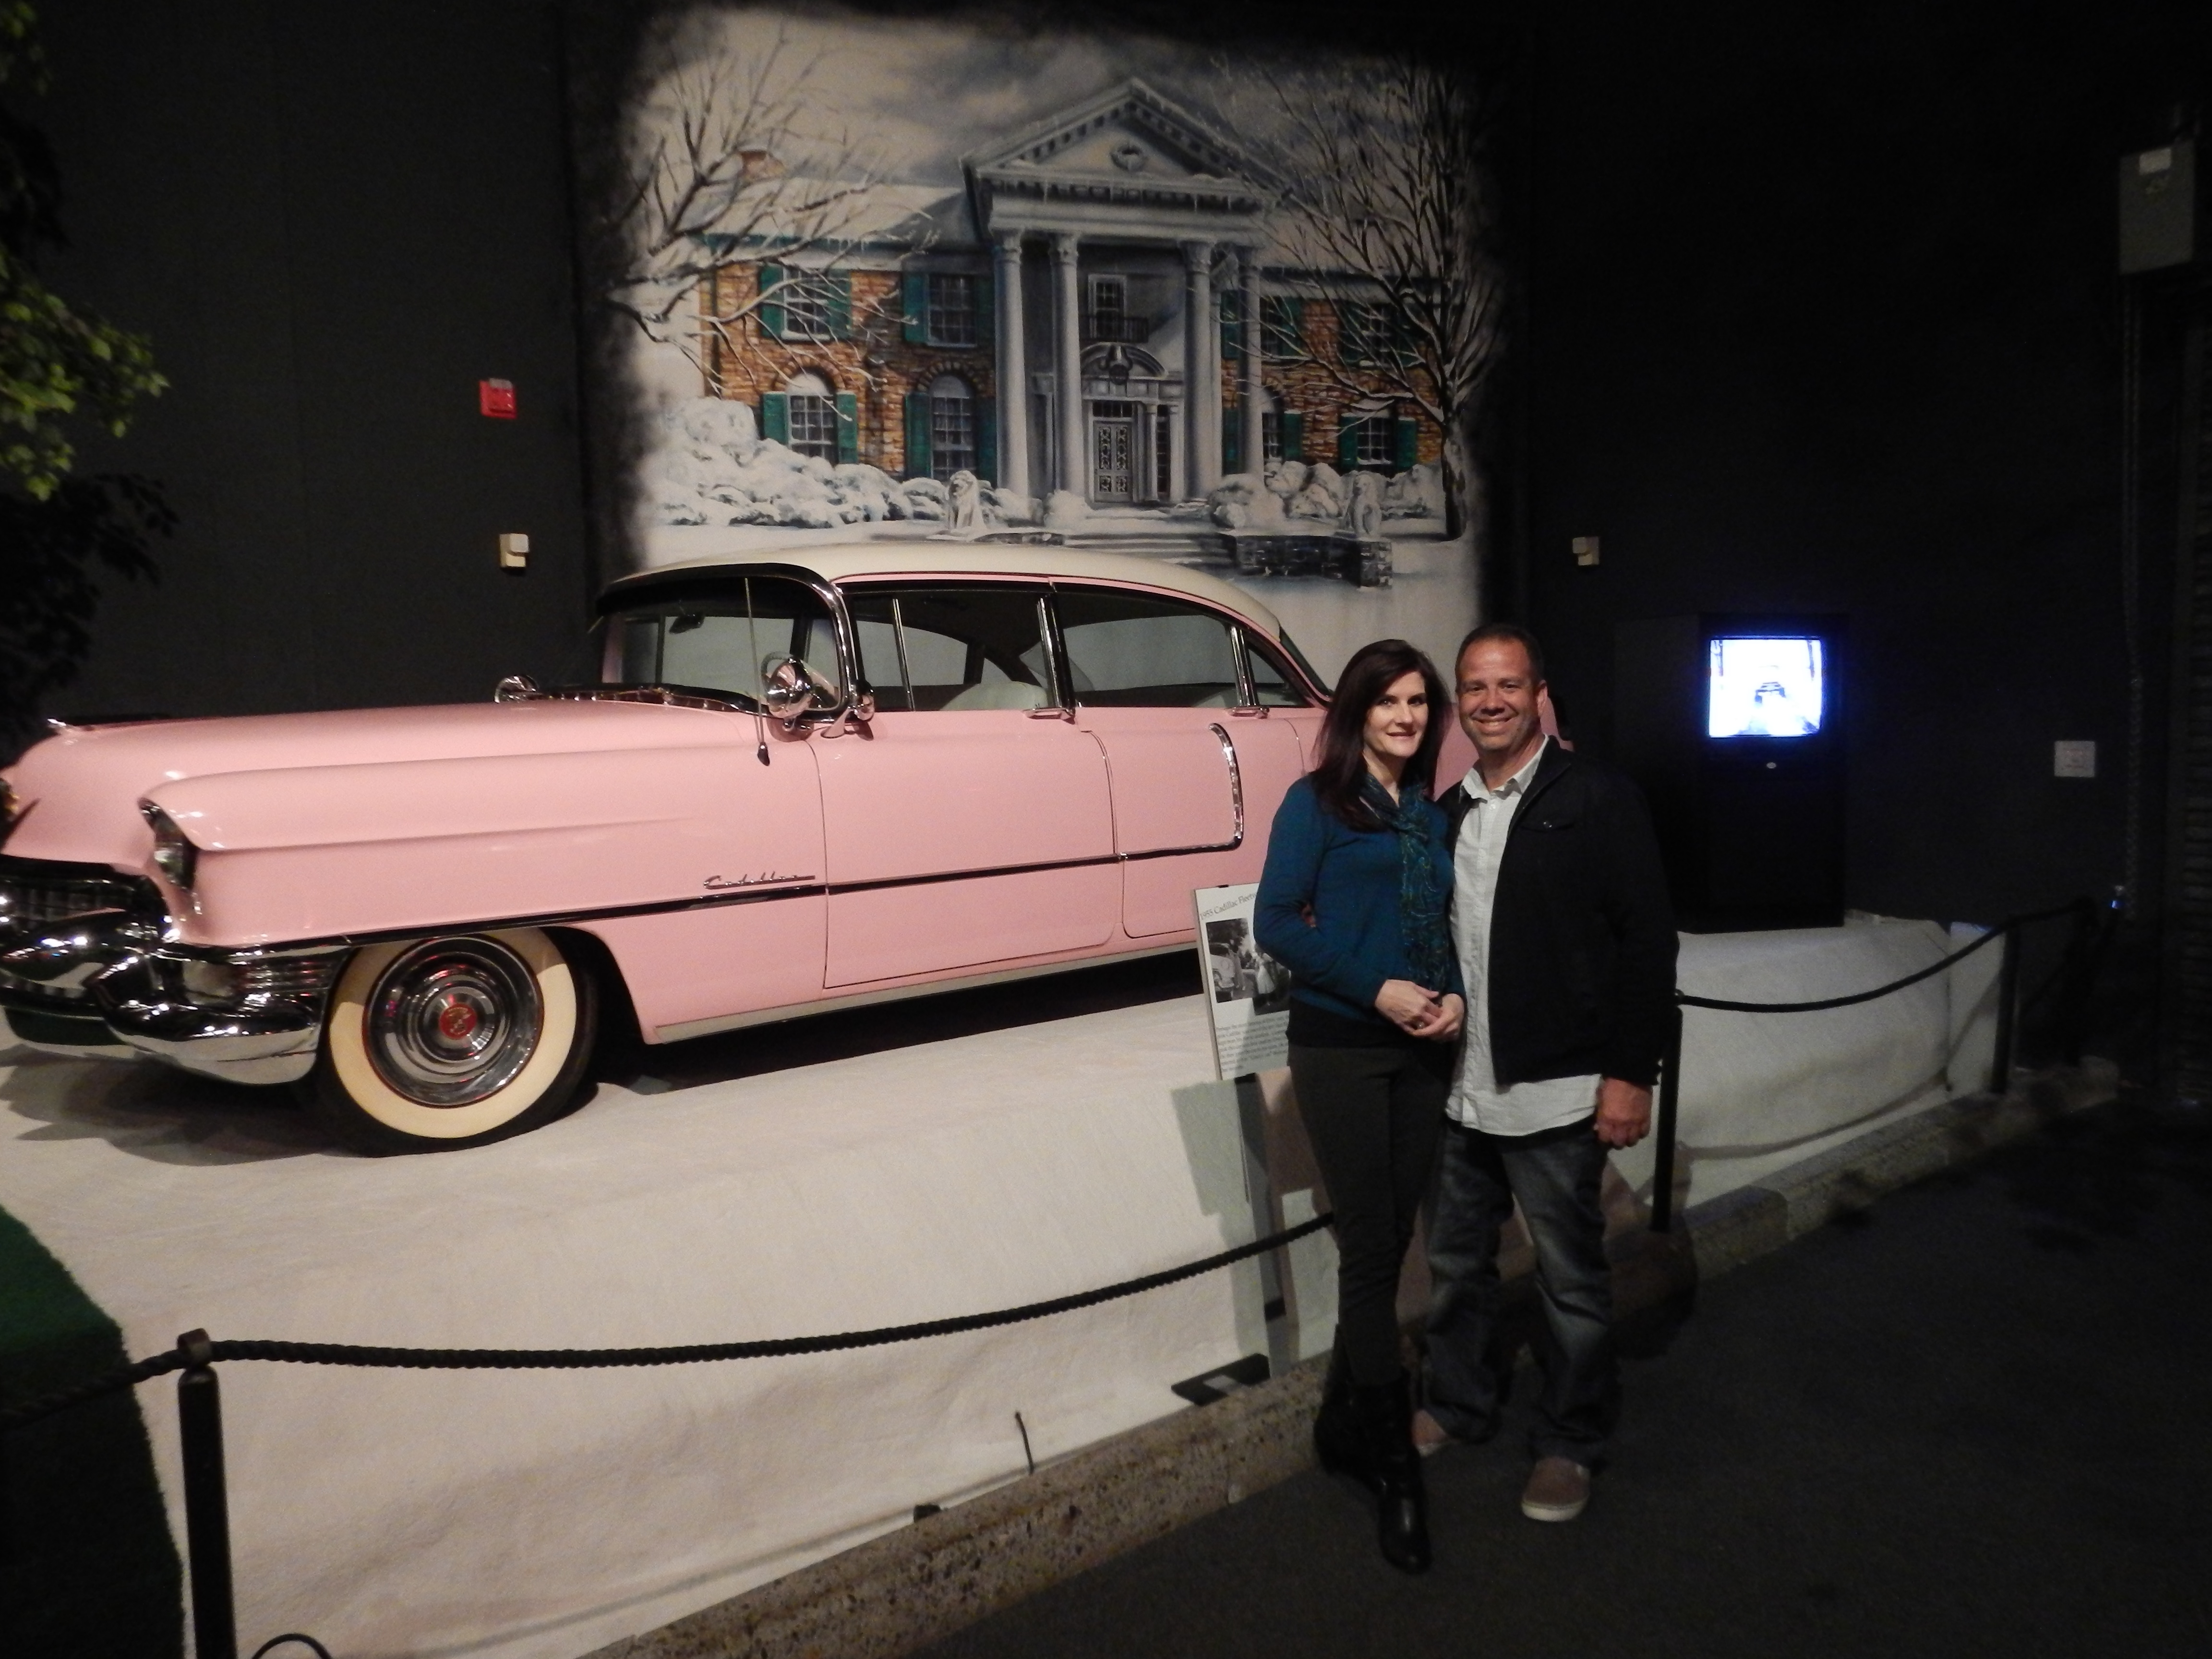 The Pink Cadillac